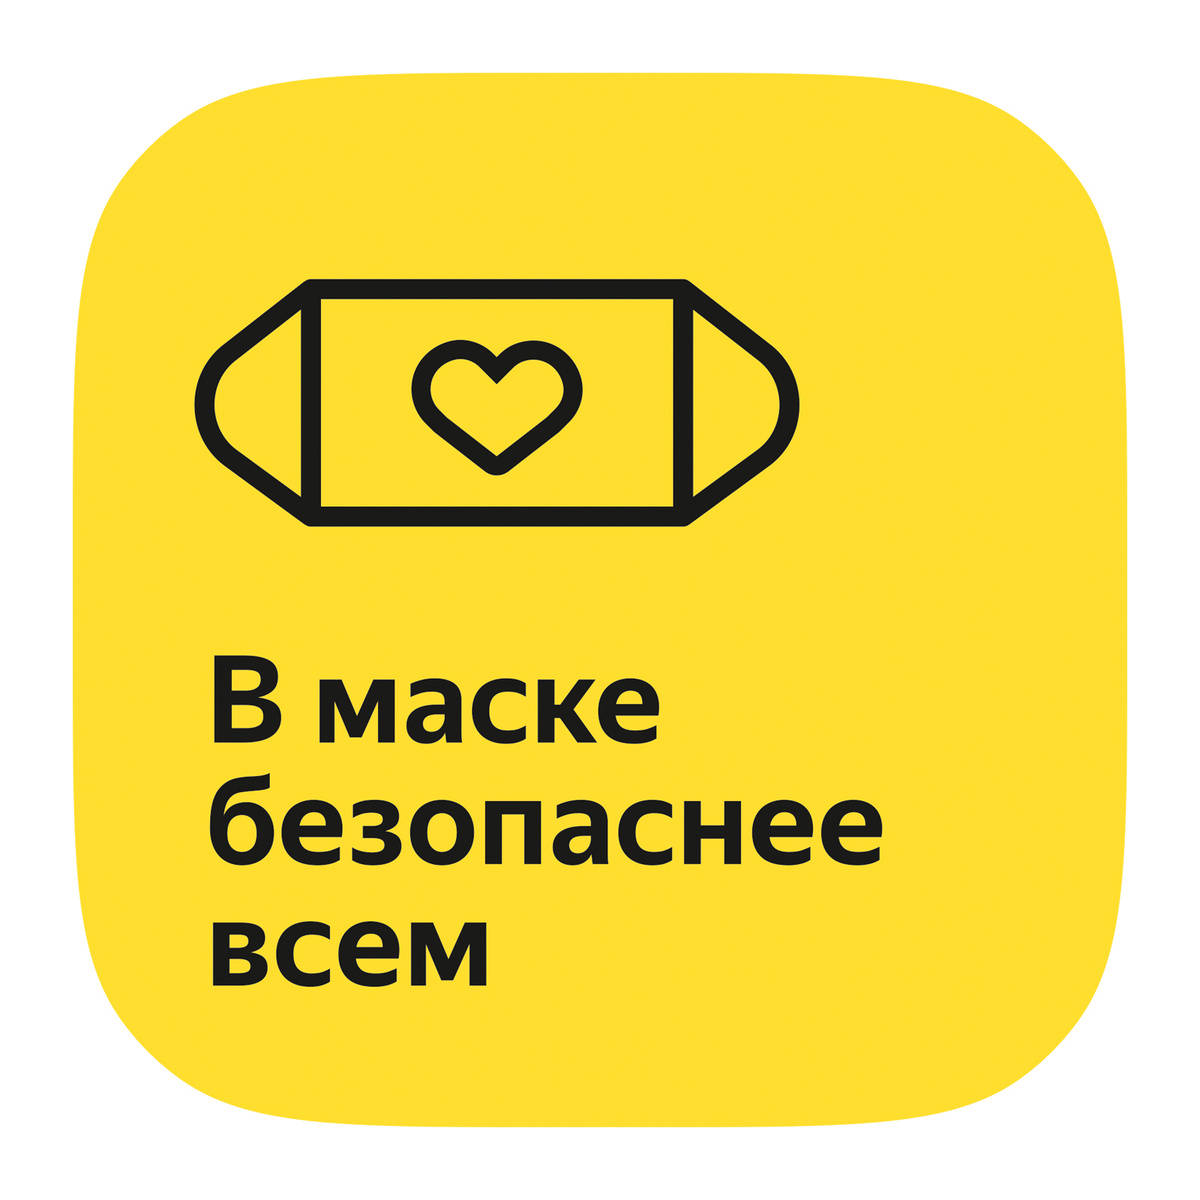 Яндекс Маркет Озон Интернет Магазин